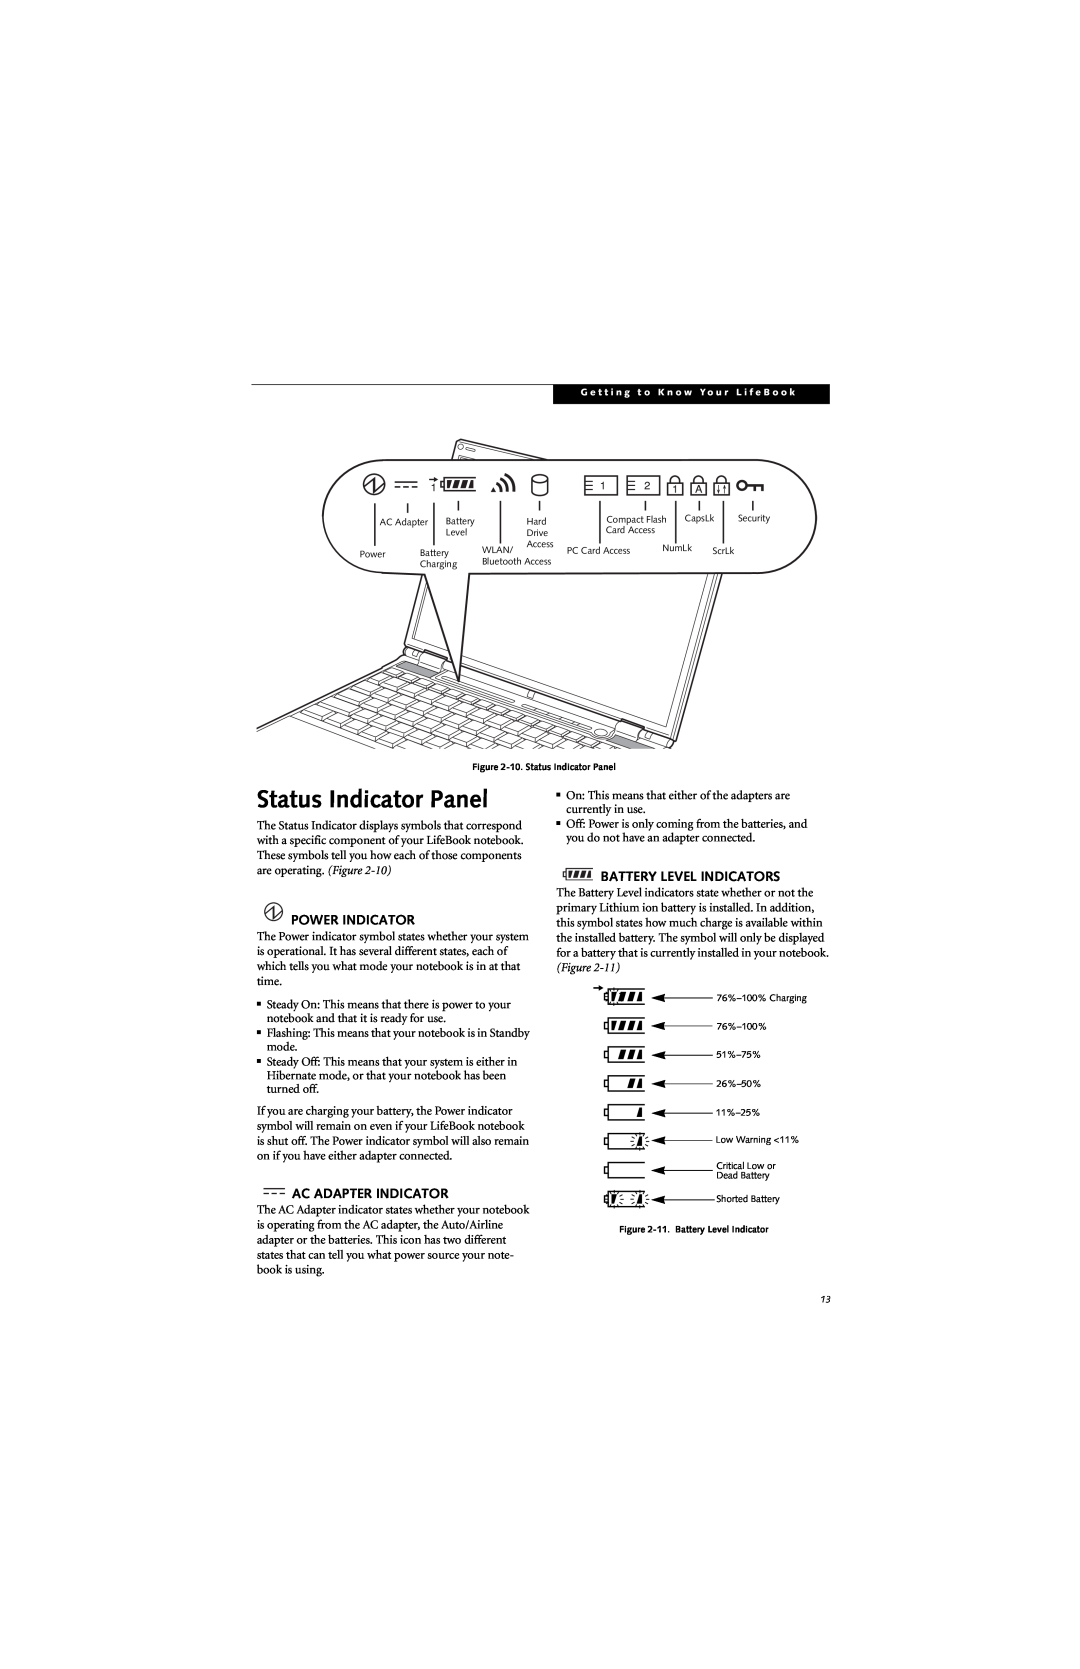 Fujitsu B6220 manual Status Indicator Panel, Power Indicator, Ac Adapter Indicator, Battery Level Indicators 